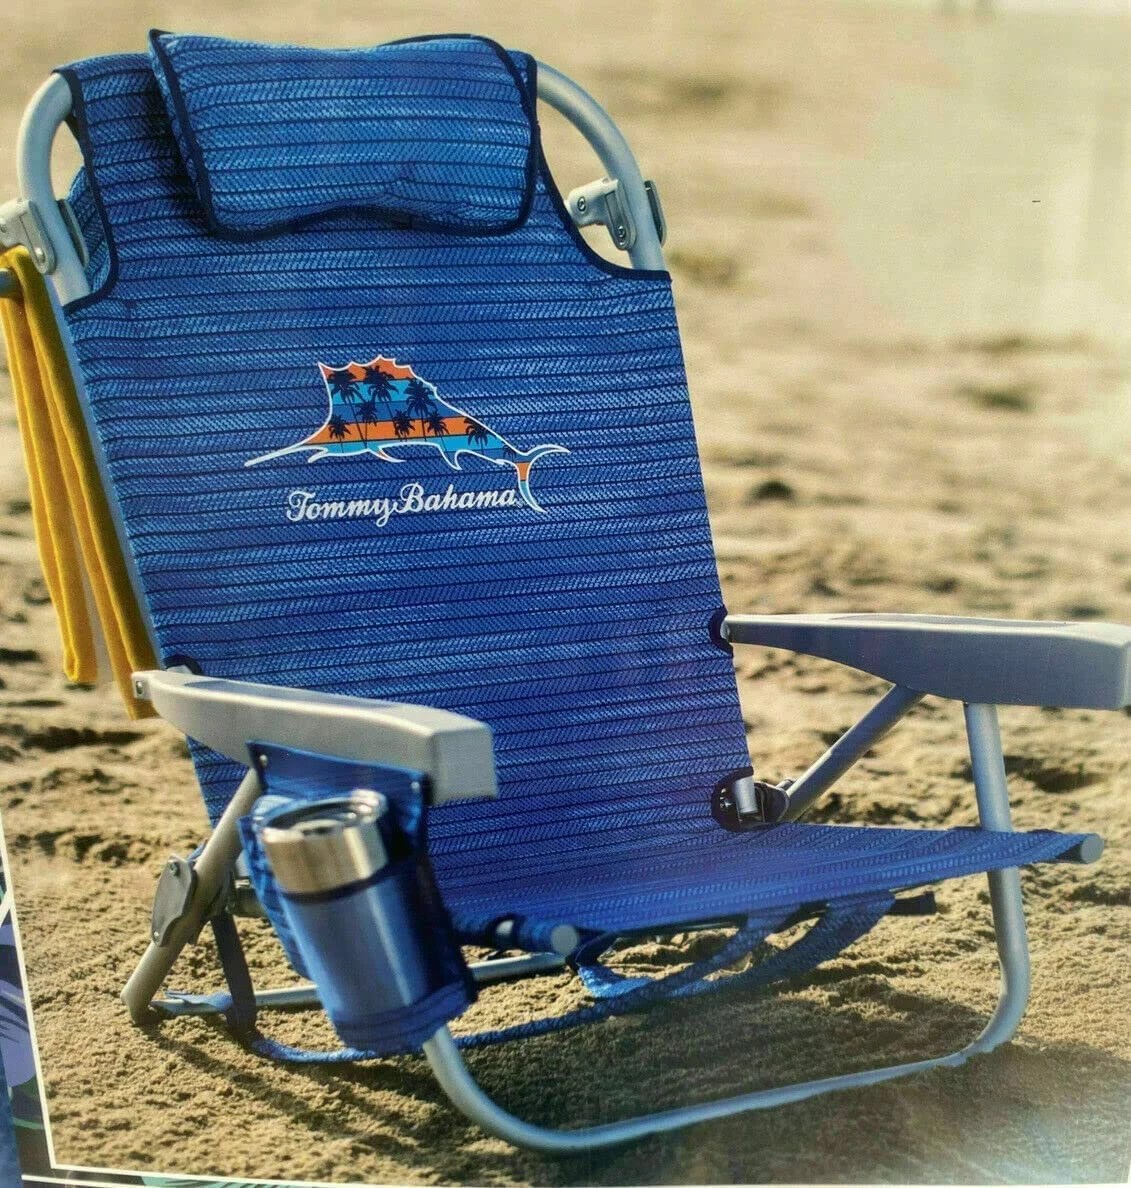 Tommy Bahama Backpack Beach Chair, best beach chairs